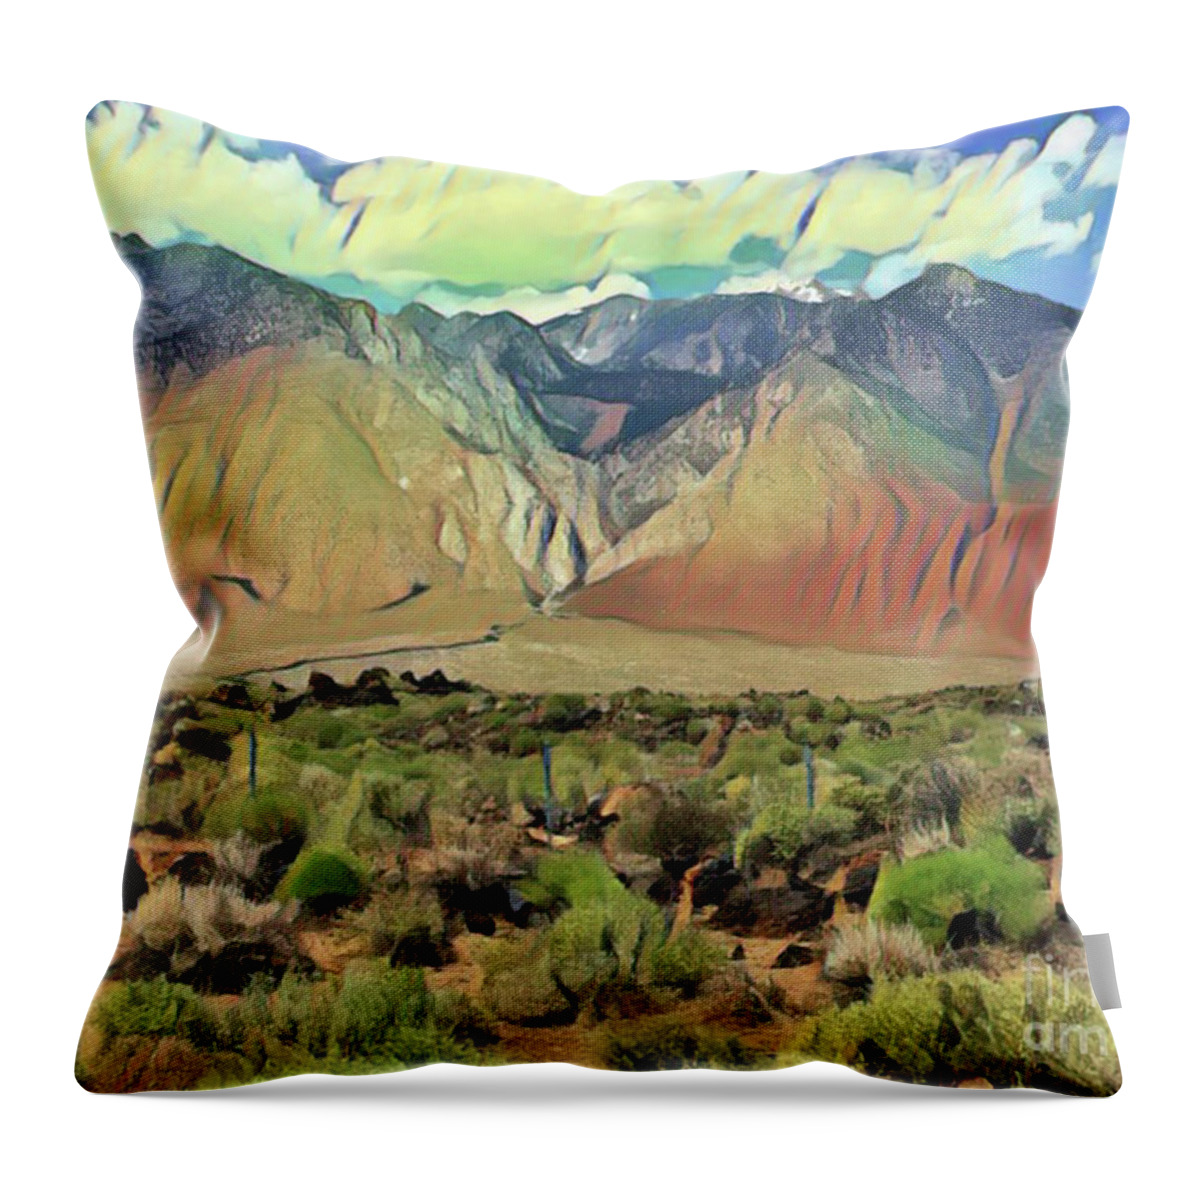 Sierras Throw Pillow featuring the digital art Sierras II by Jackie MacNair